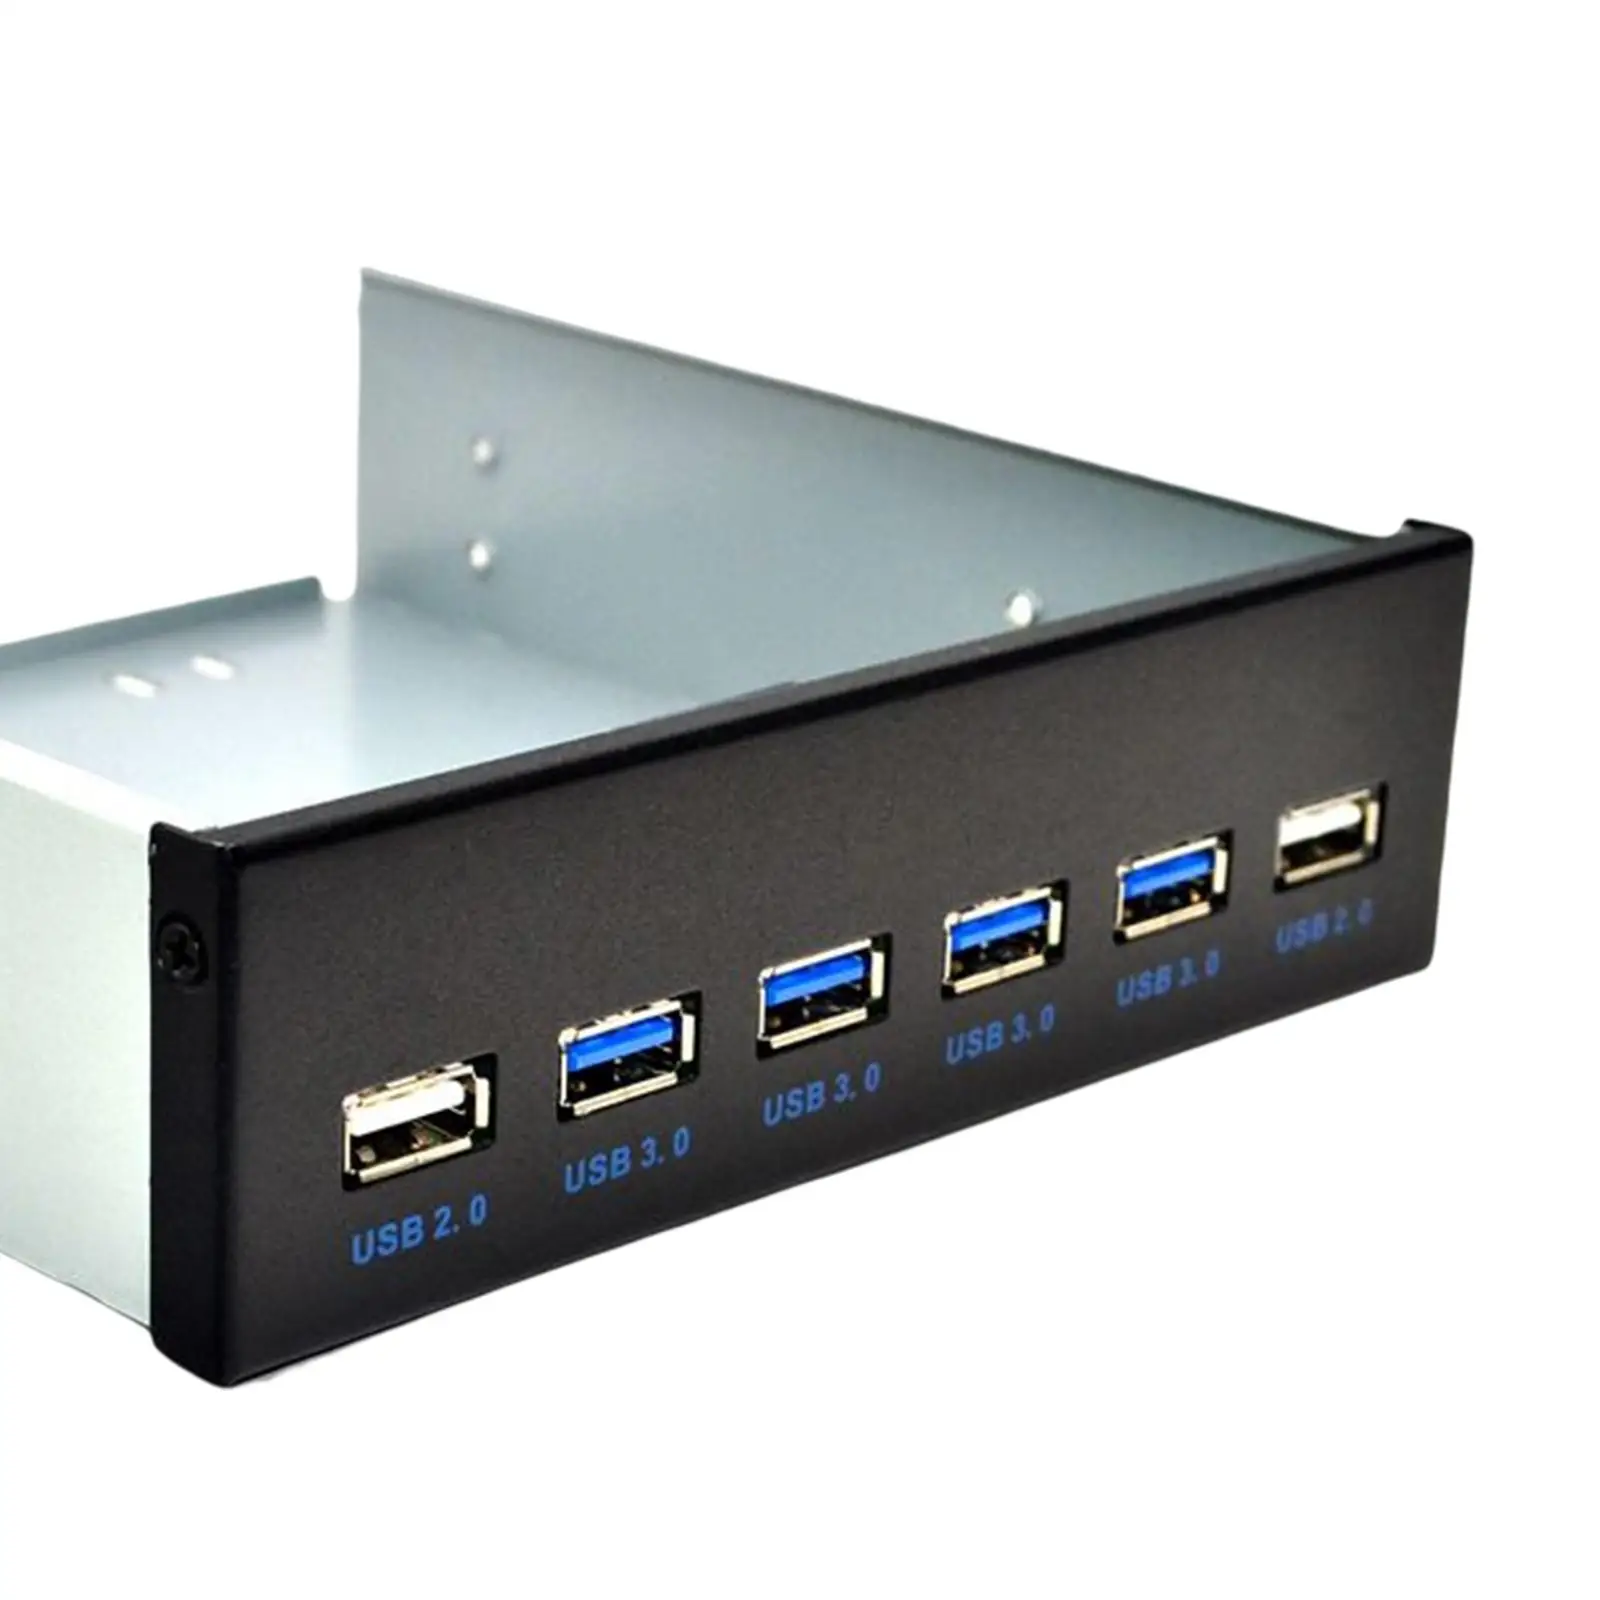 5.25 inch Front Panel USB Hub 4xUSB3.0 + 2x USB2.0 19 Pin to 6 Interface Plug and Play High Speed USB 3.0 Hub for PC Computer